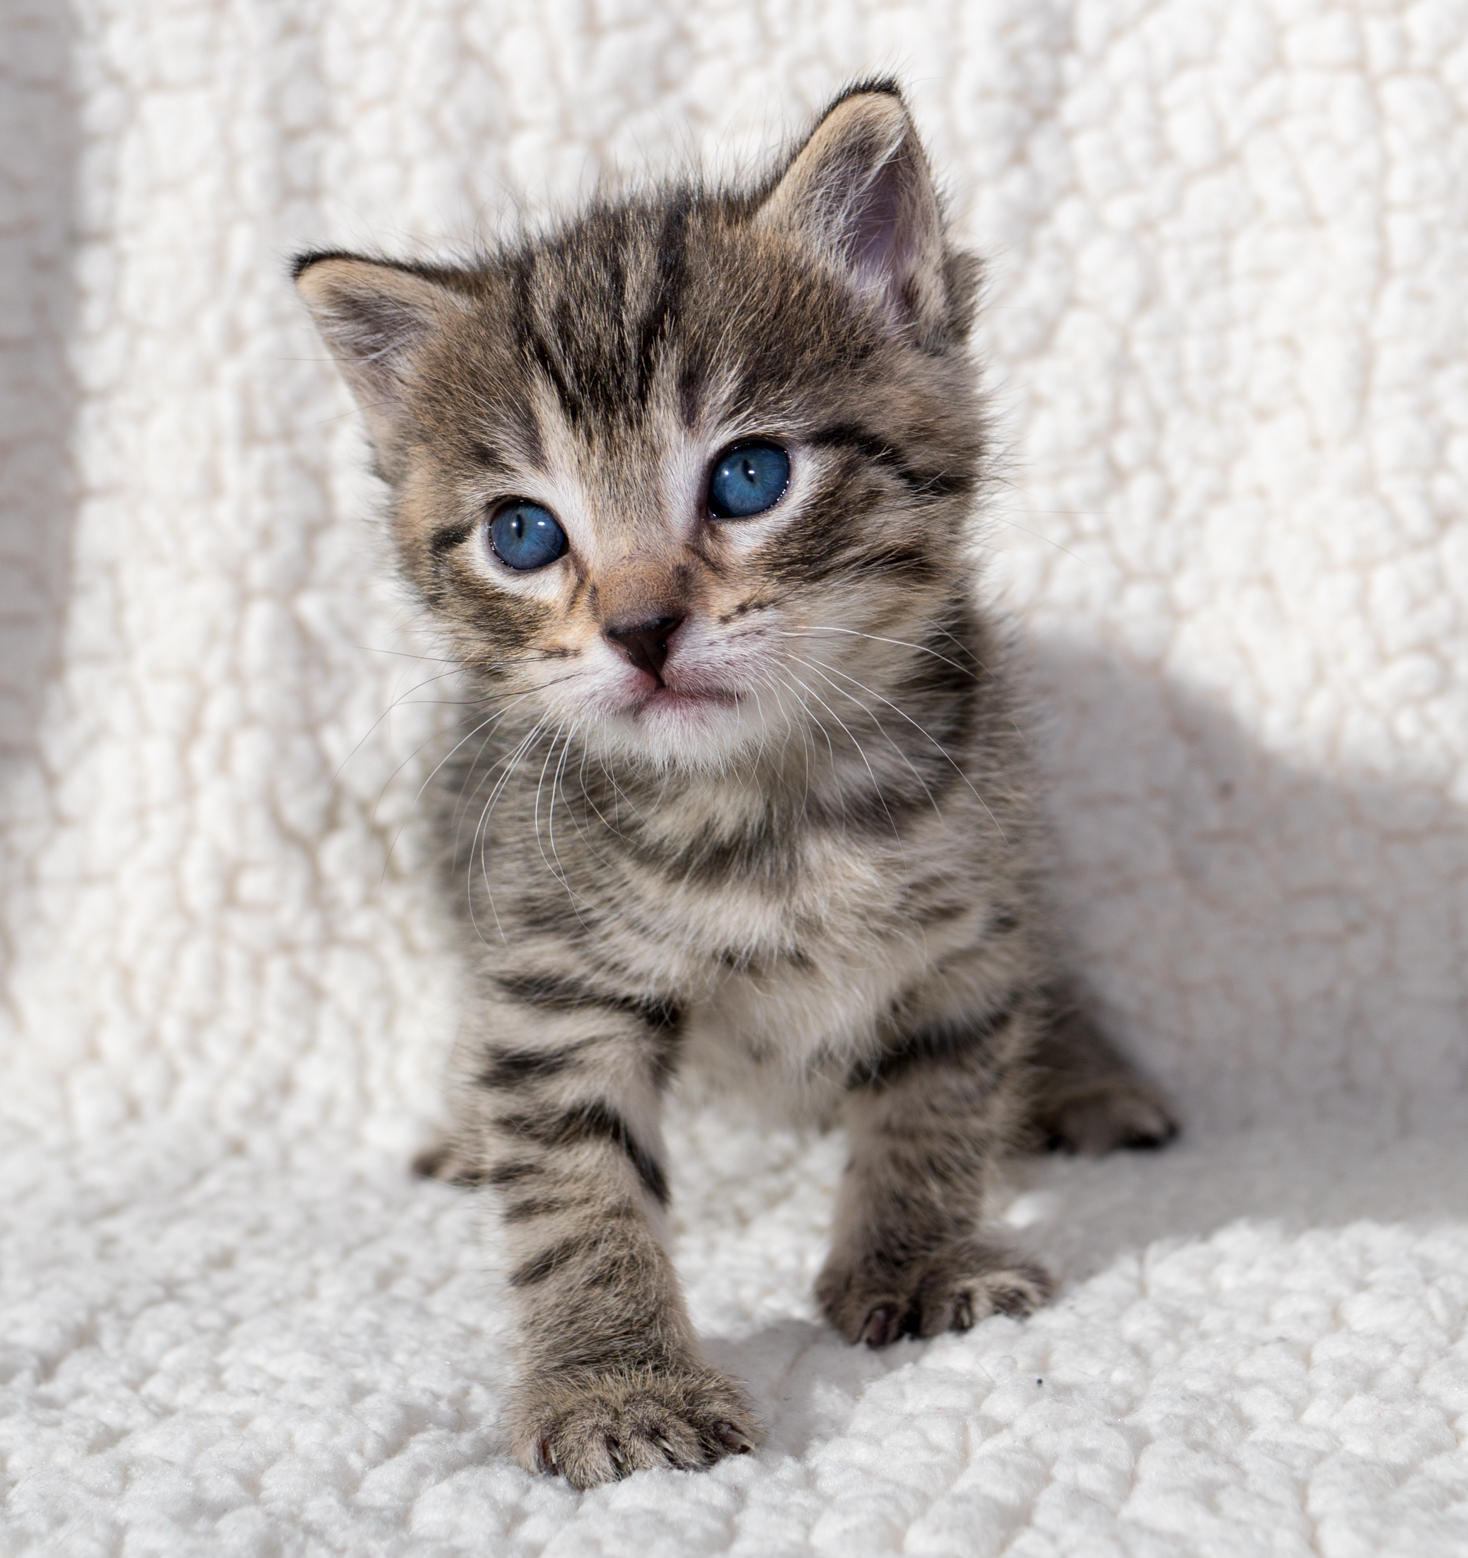 Baf Time Kittens Updates! — Kitten Academy